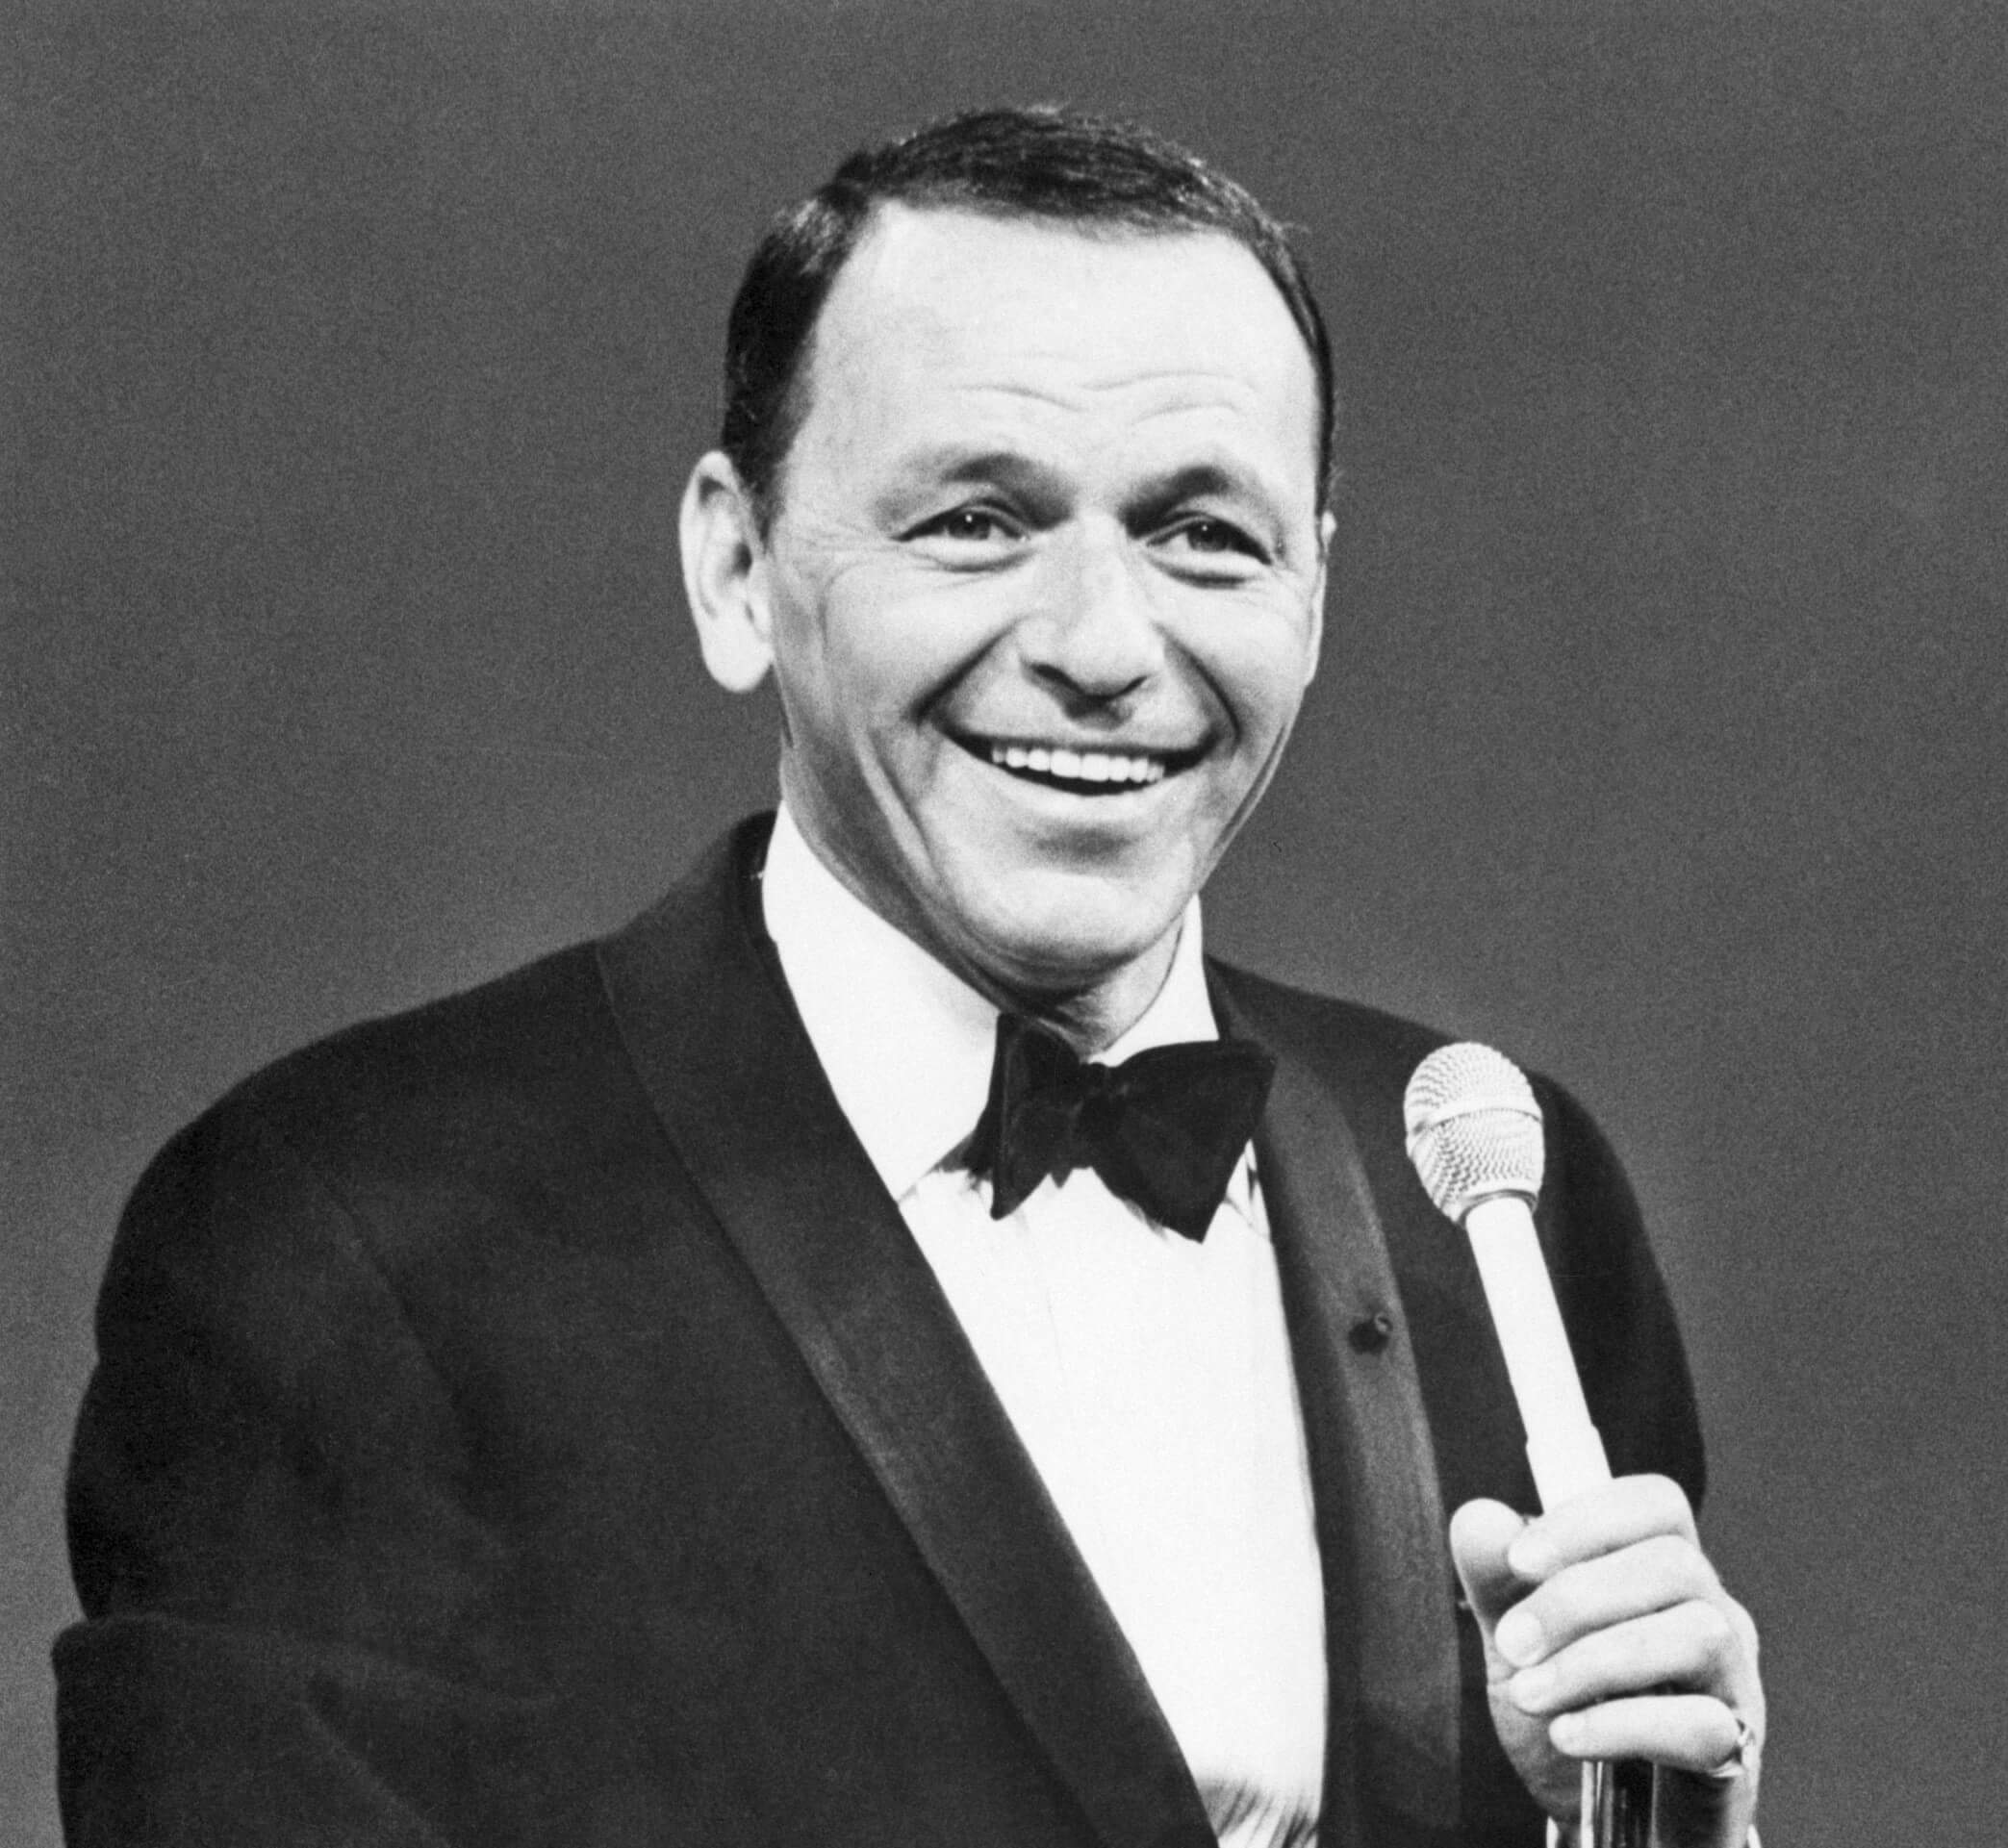 "My Way" singer Frank Sinatra smiling